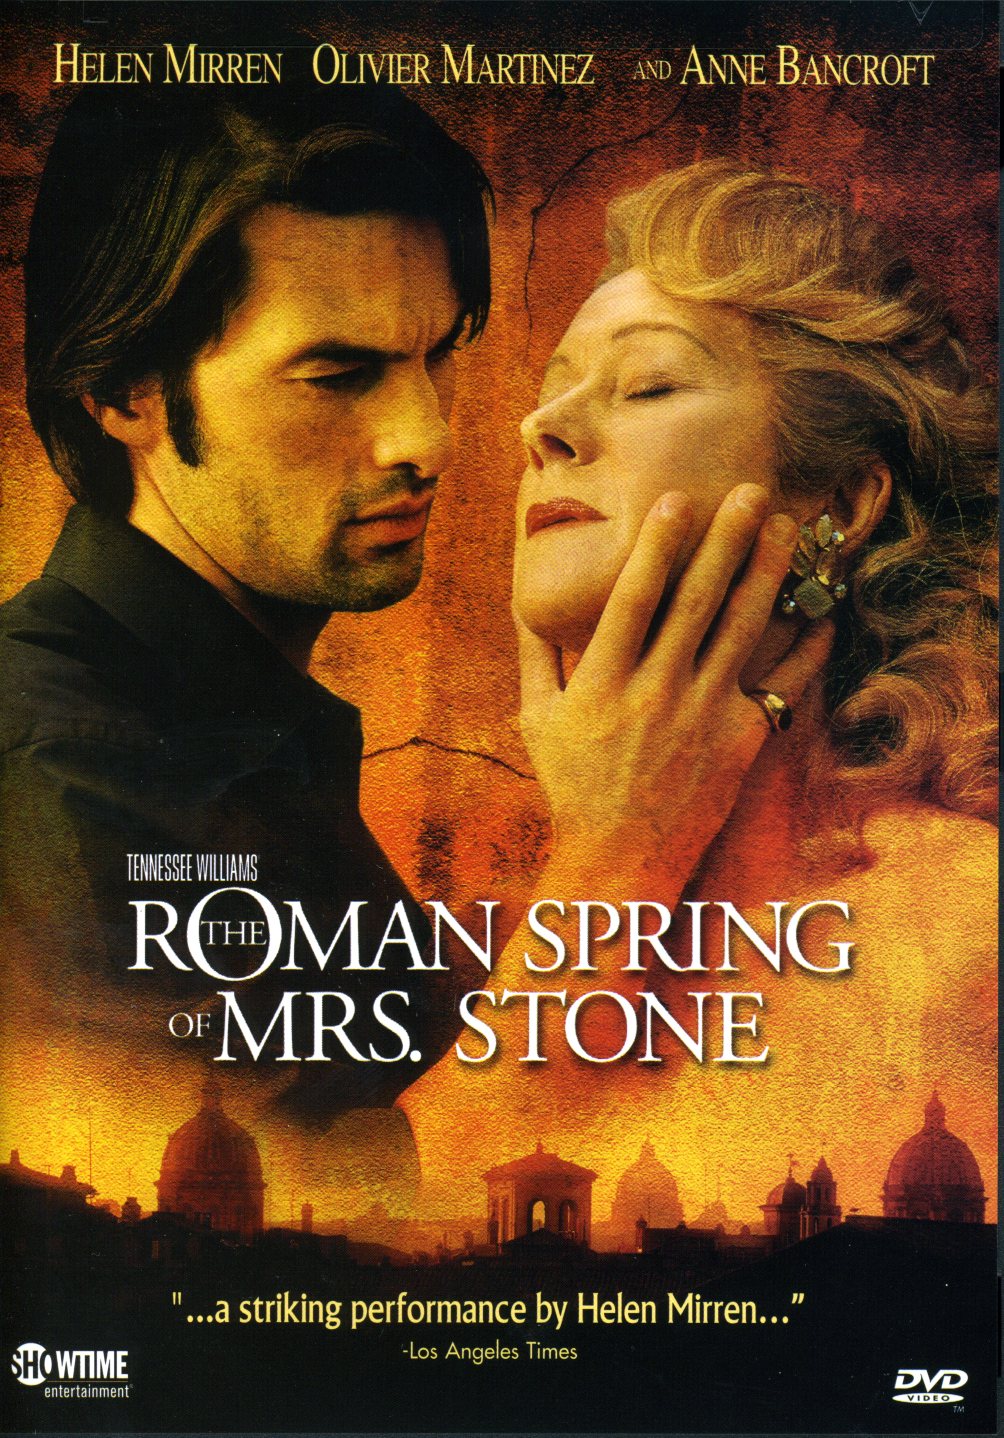 ROMAN SPRING OF MRS STONE (2003)